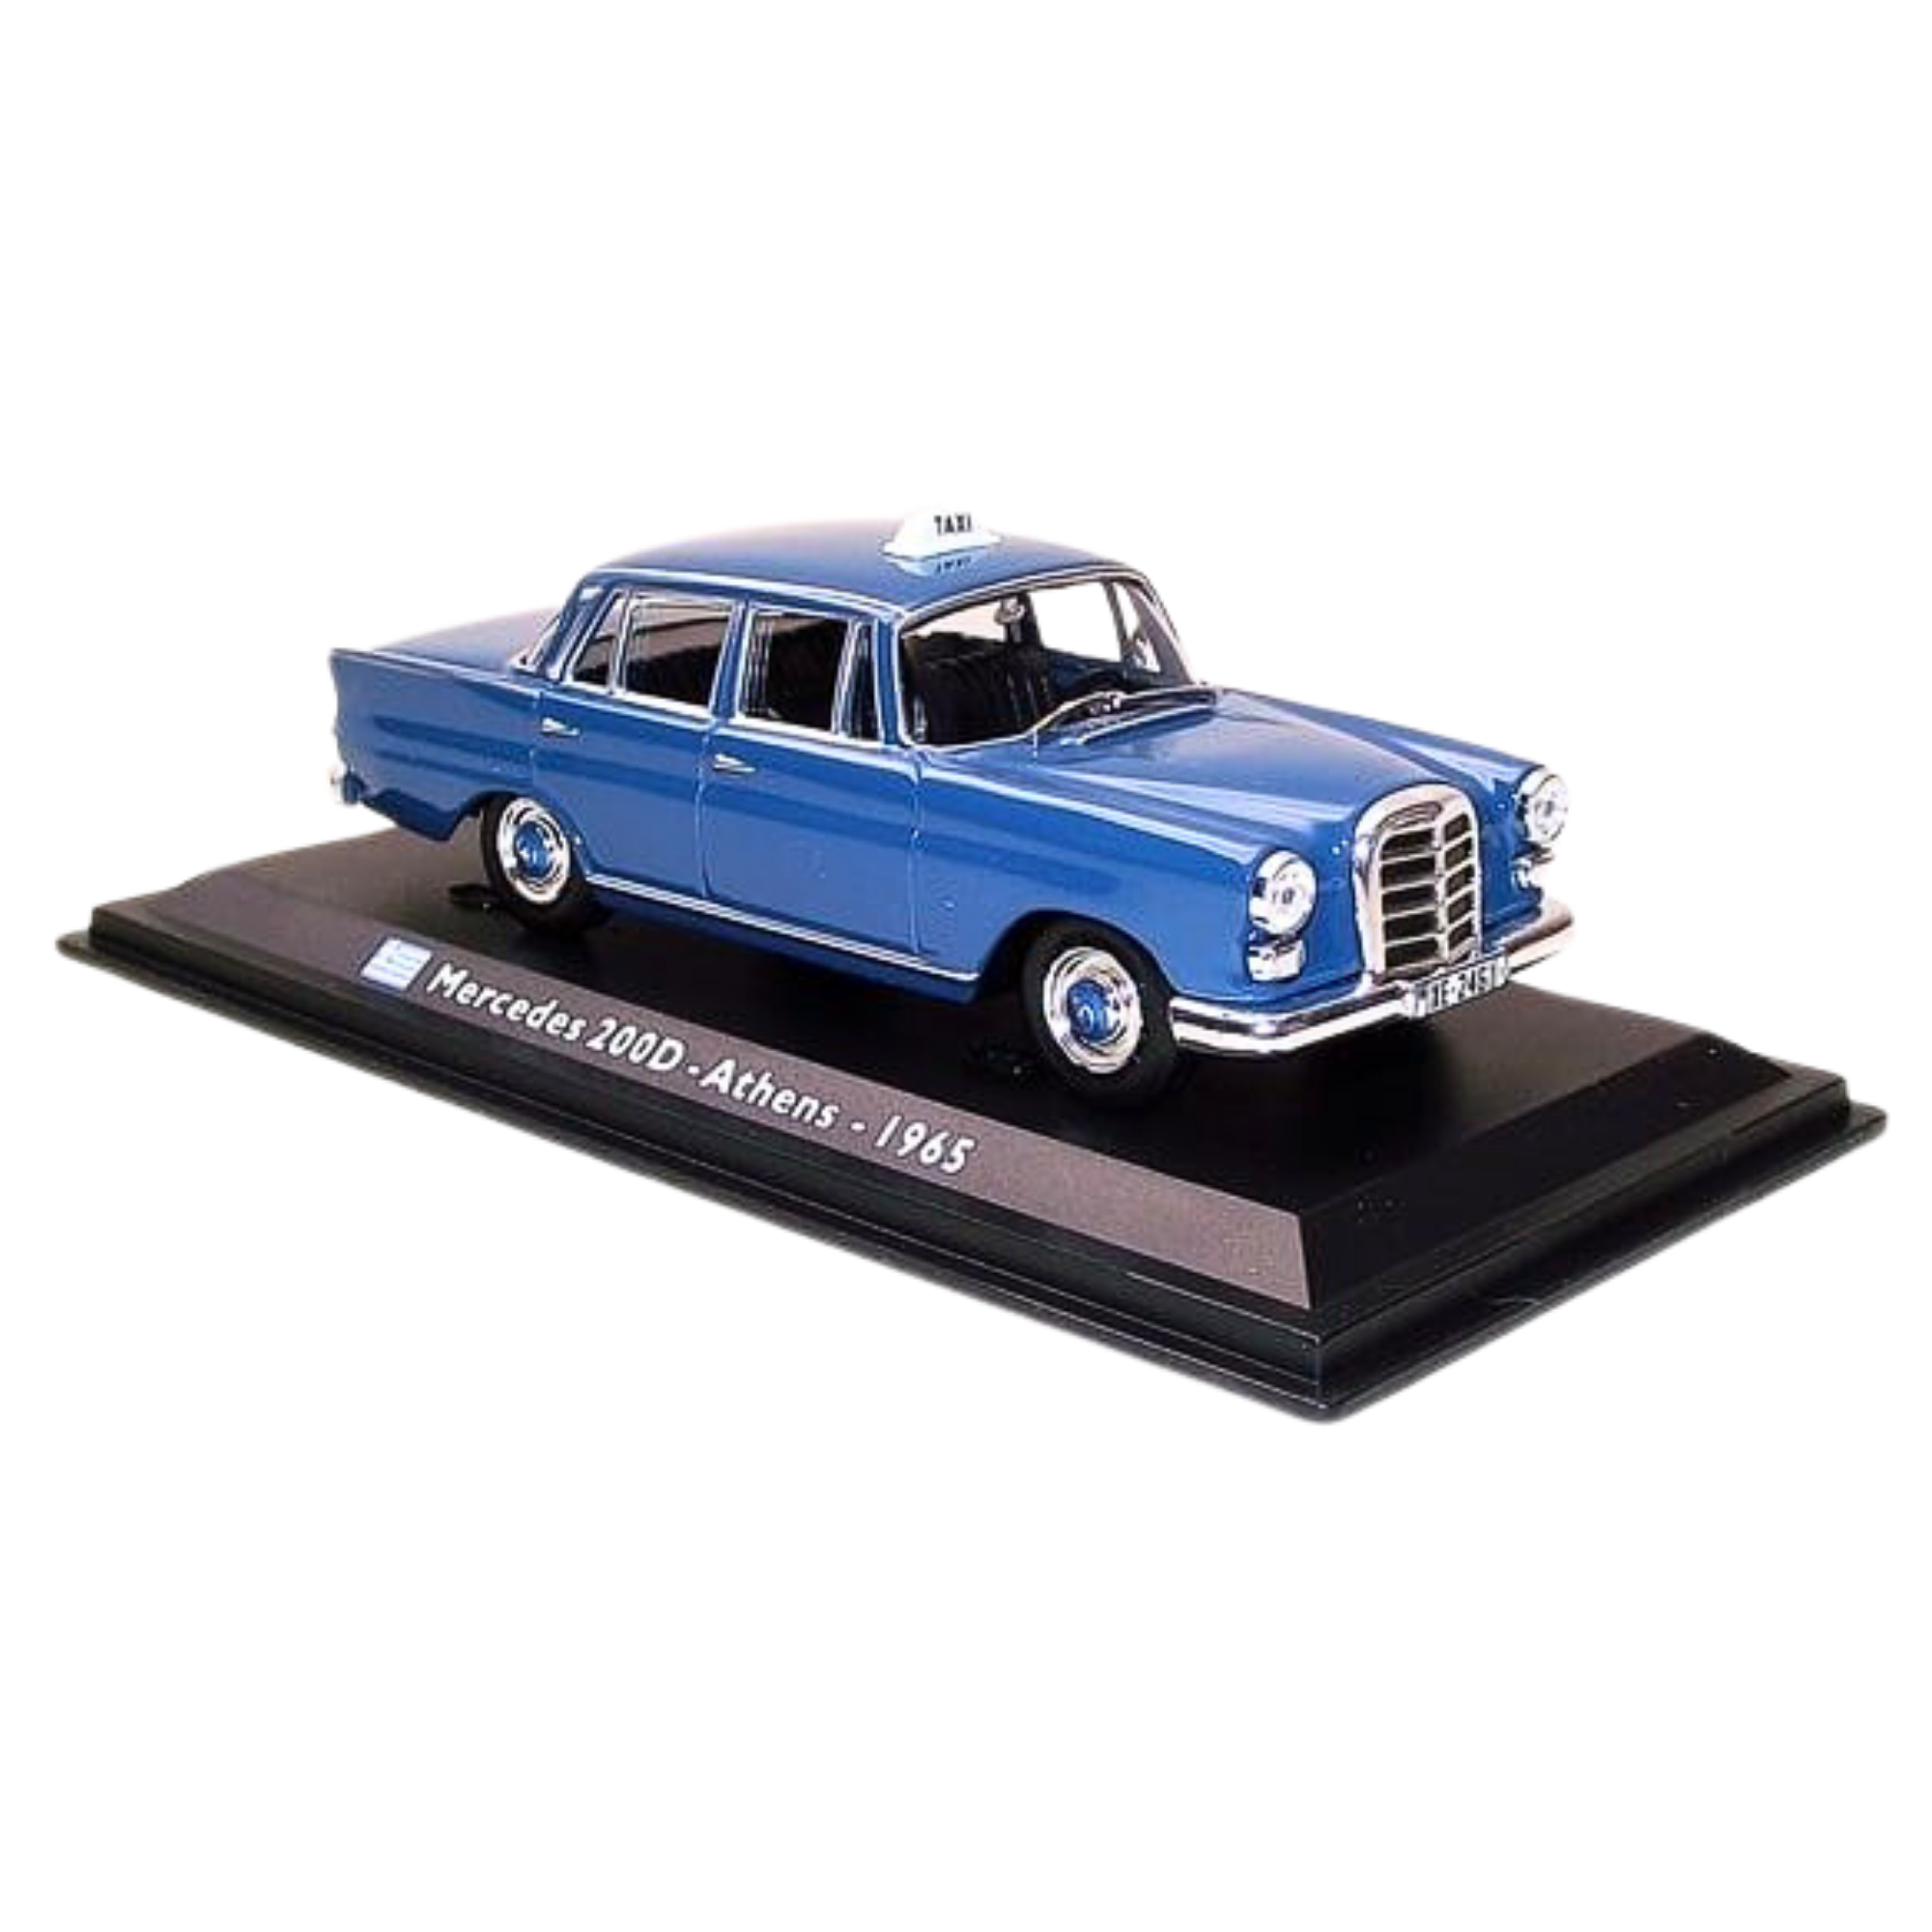 Mercedes 200D Athens Taxi Car Model 1965 Classic Blue 1:43 Scale Diecast Y0675J - Toptoys2u